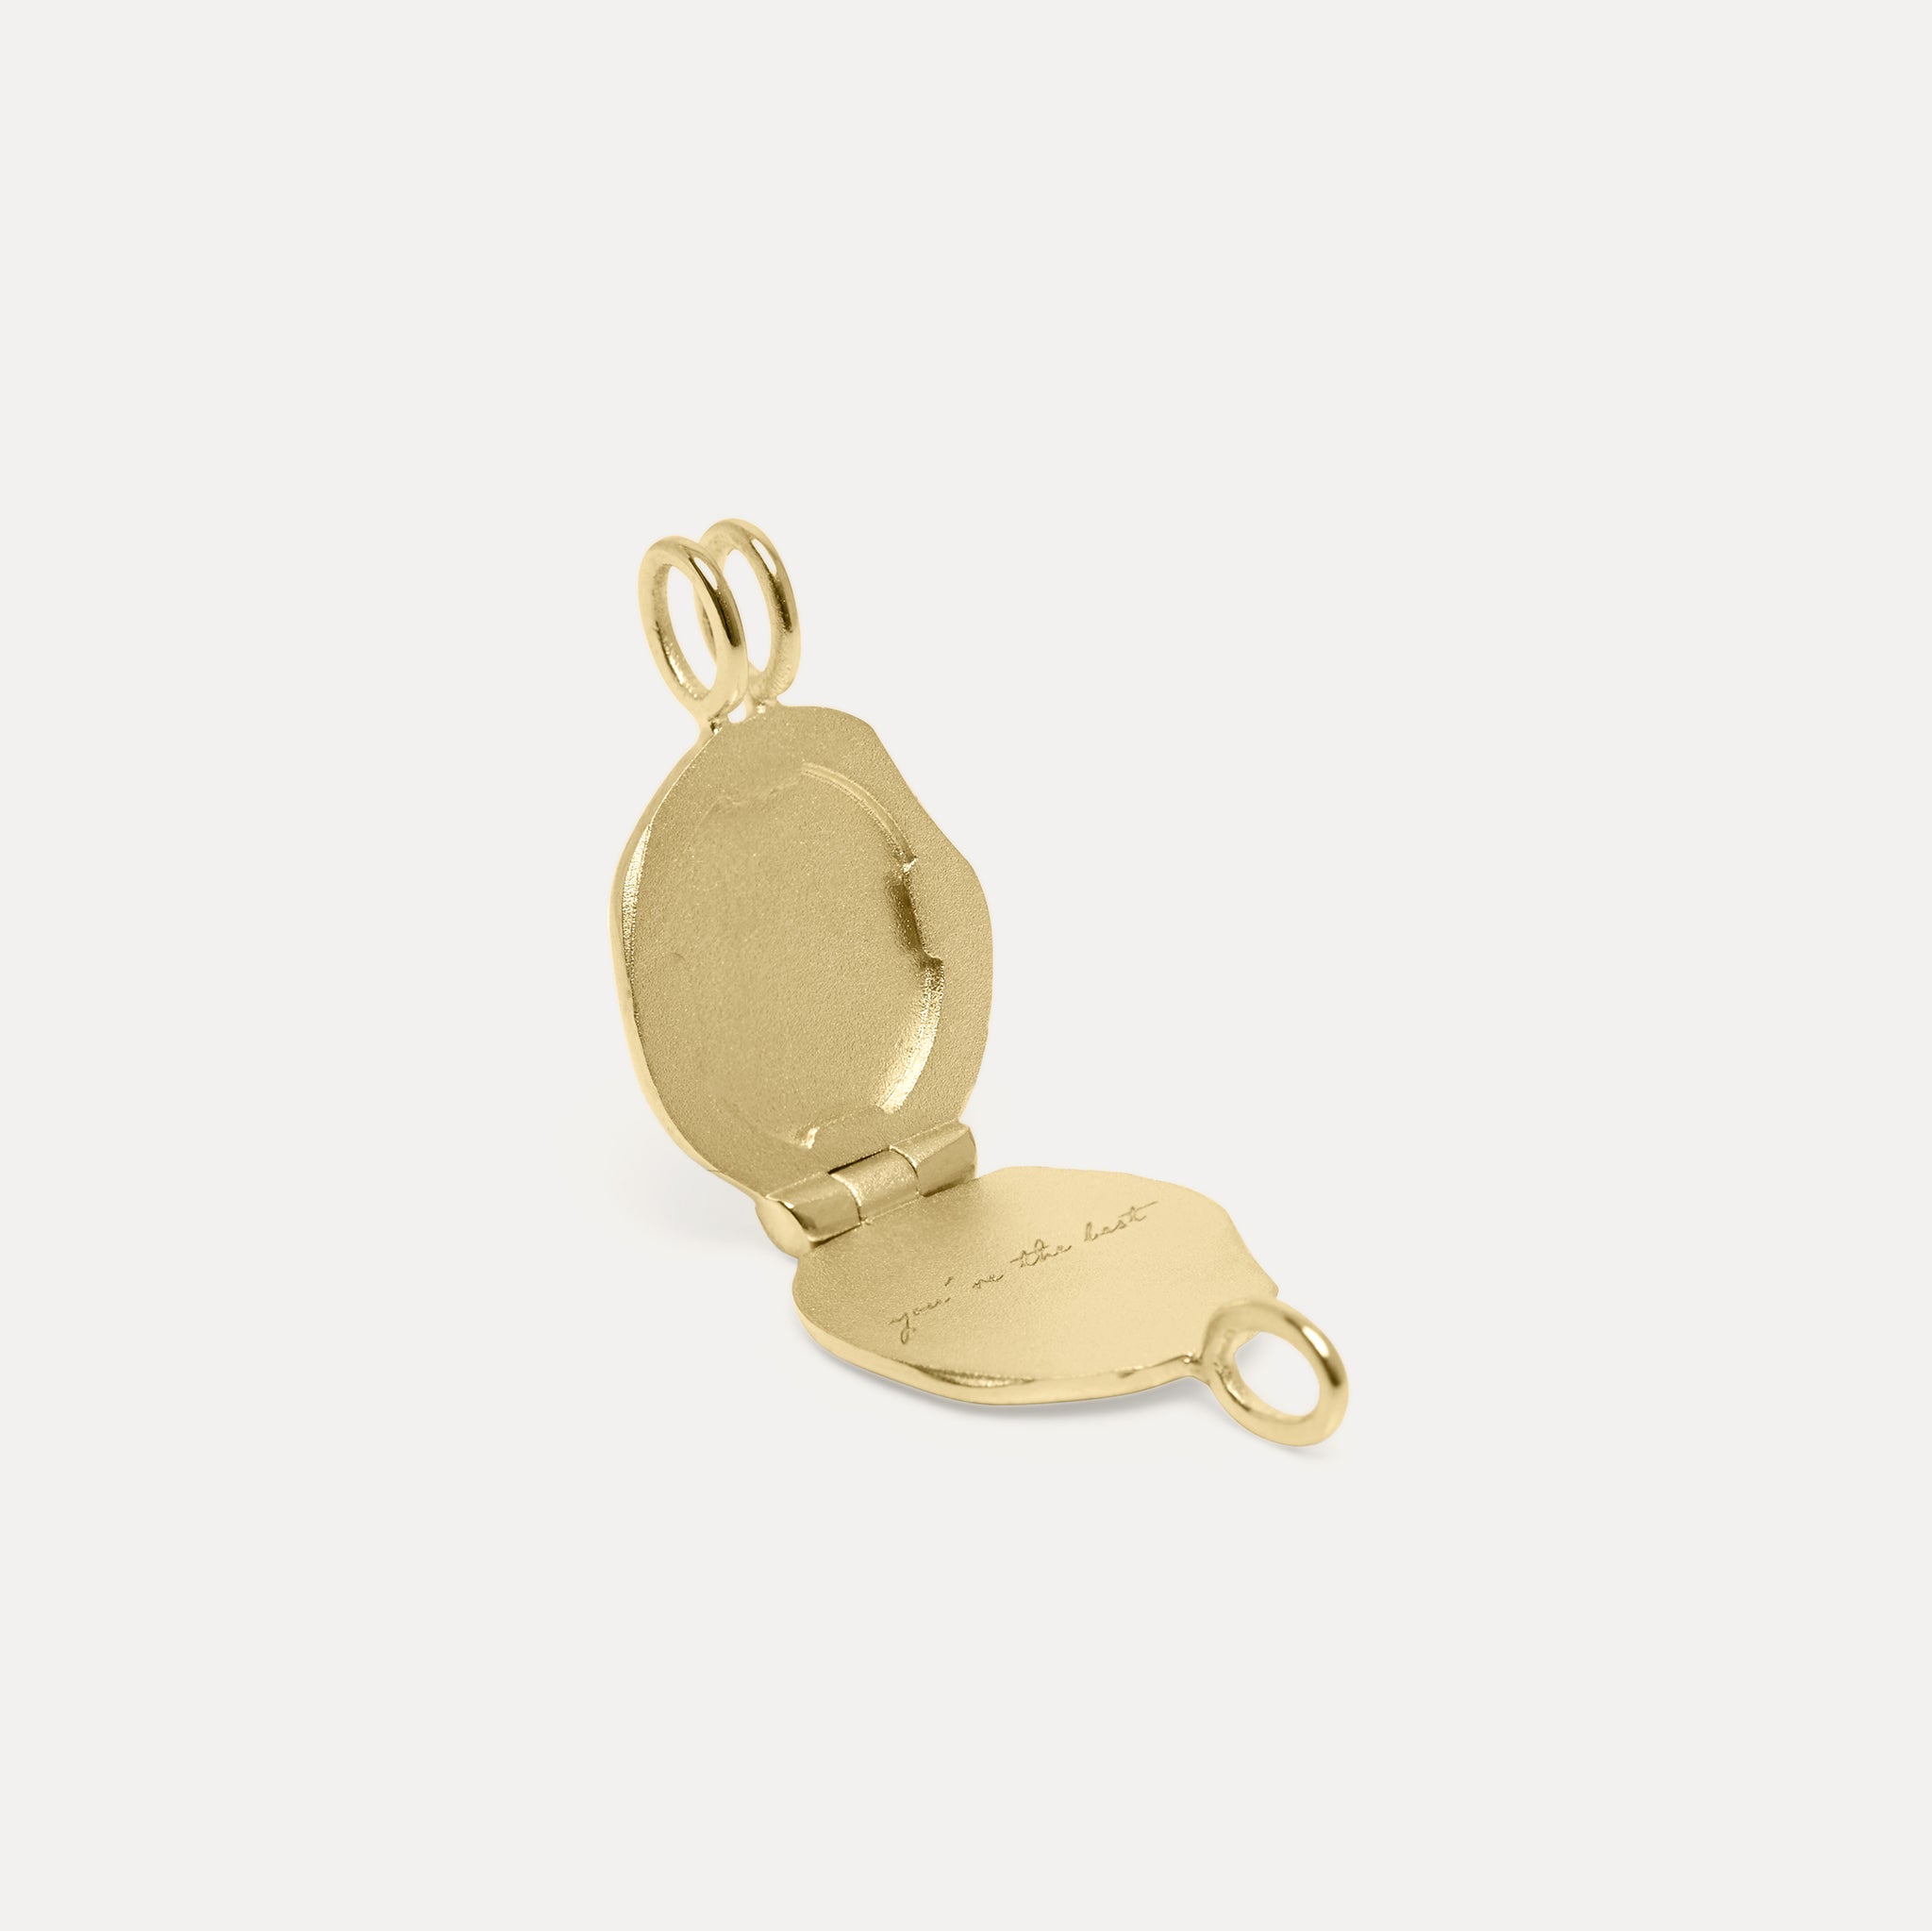 Engravable Seal Medaillon Kette 14k Massivgold